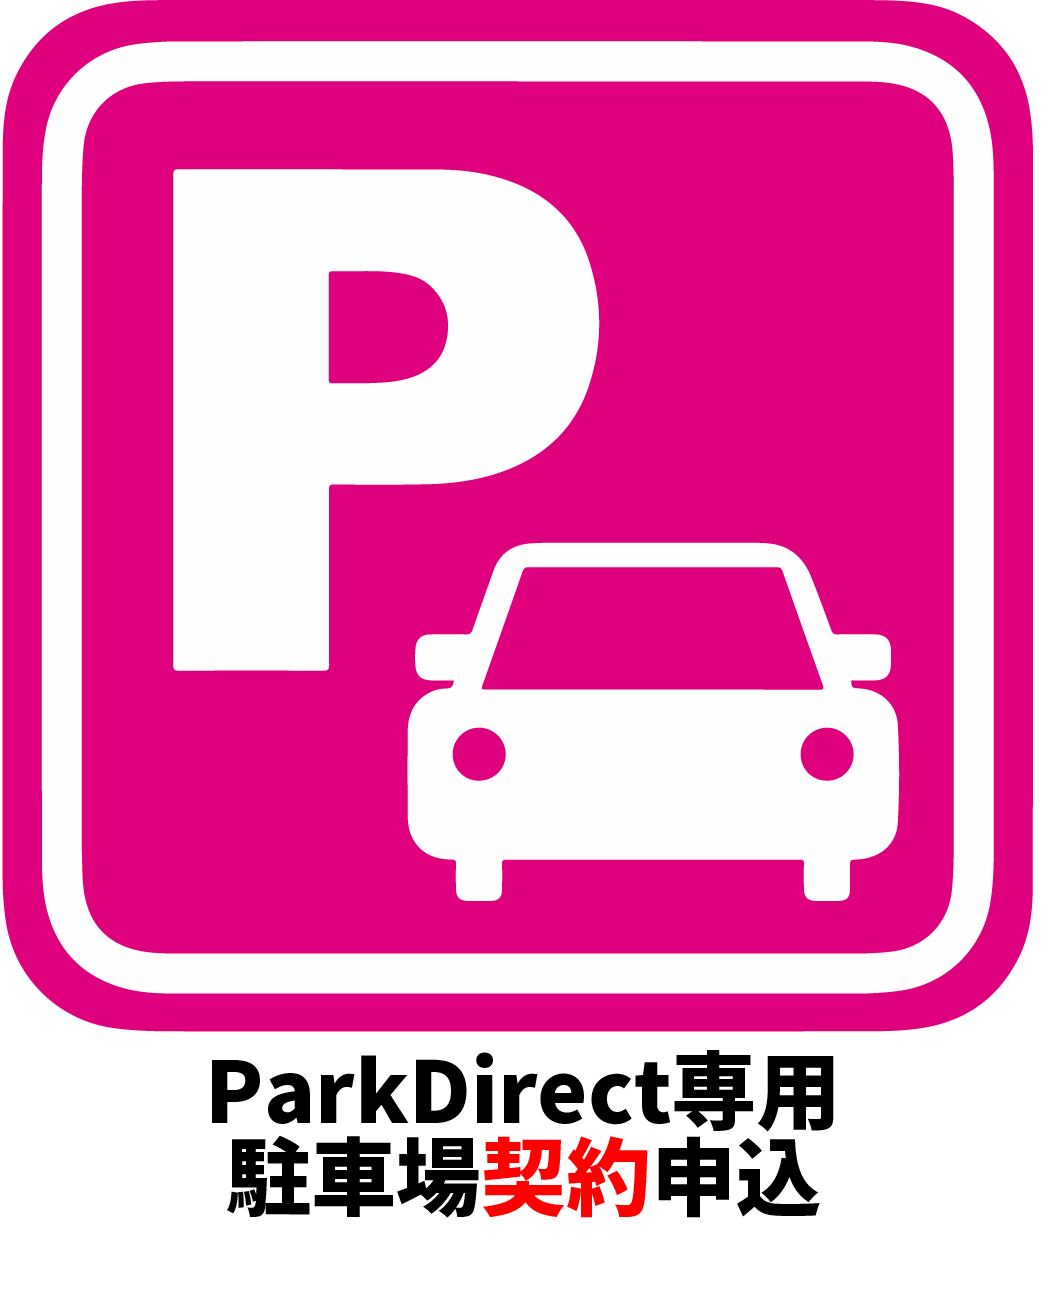 ParkDirect専用